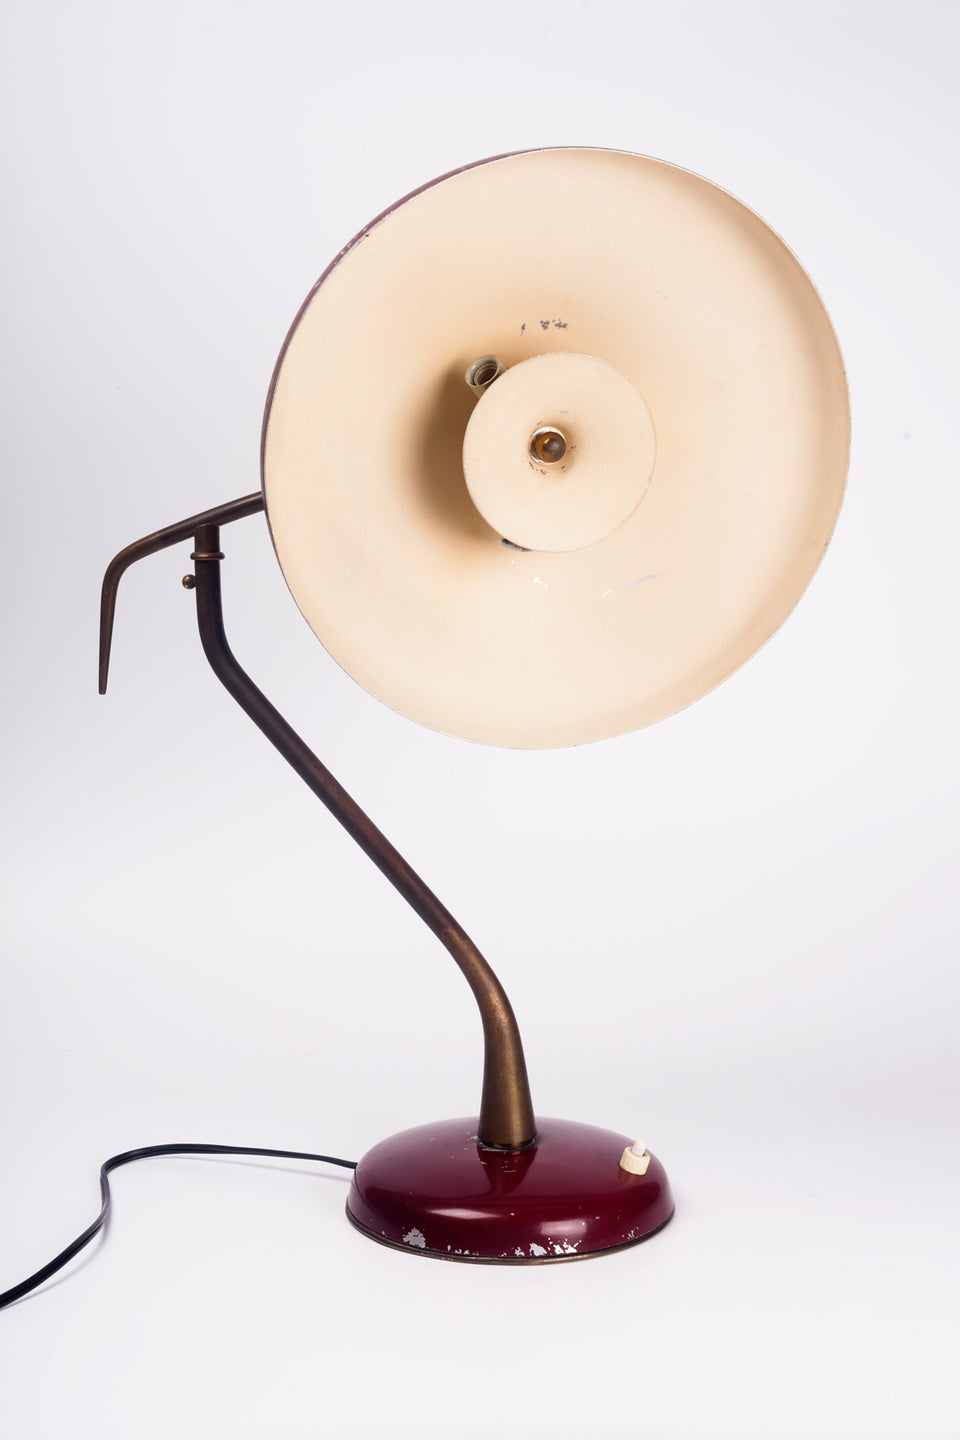 Italian, 1950s Oscar Torlasco table lamp at PHX Gallery. 